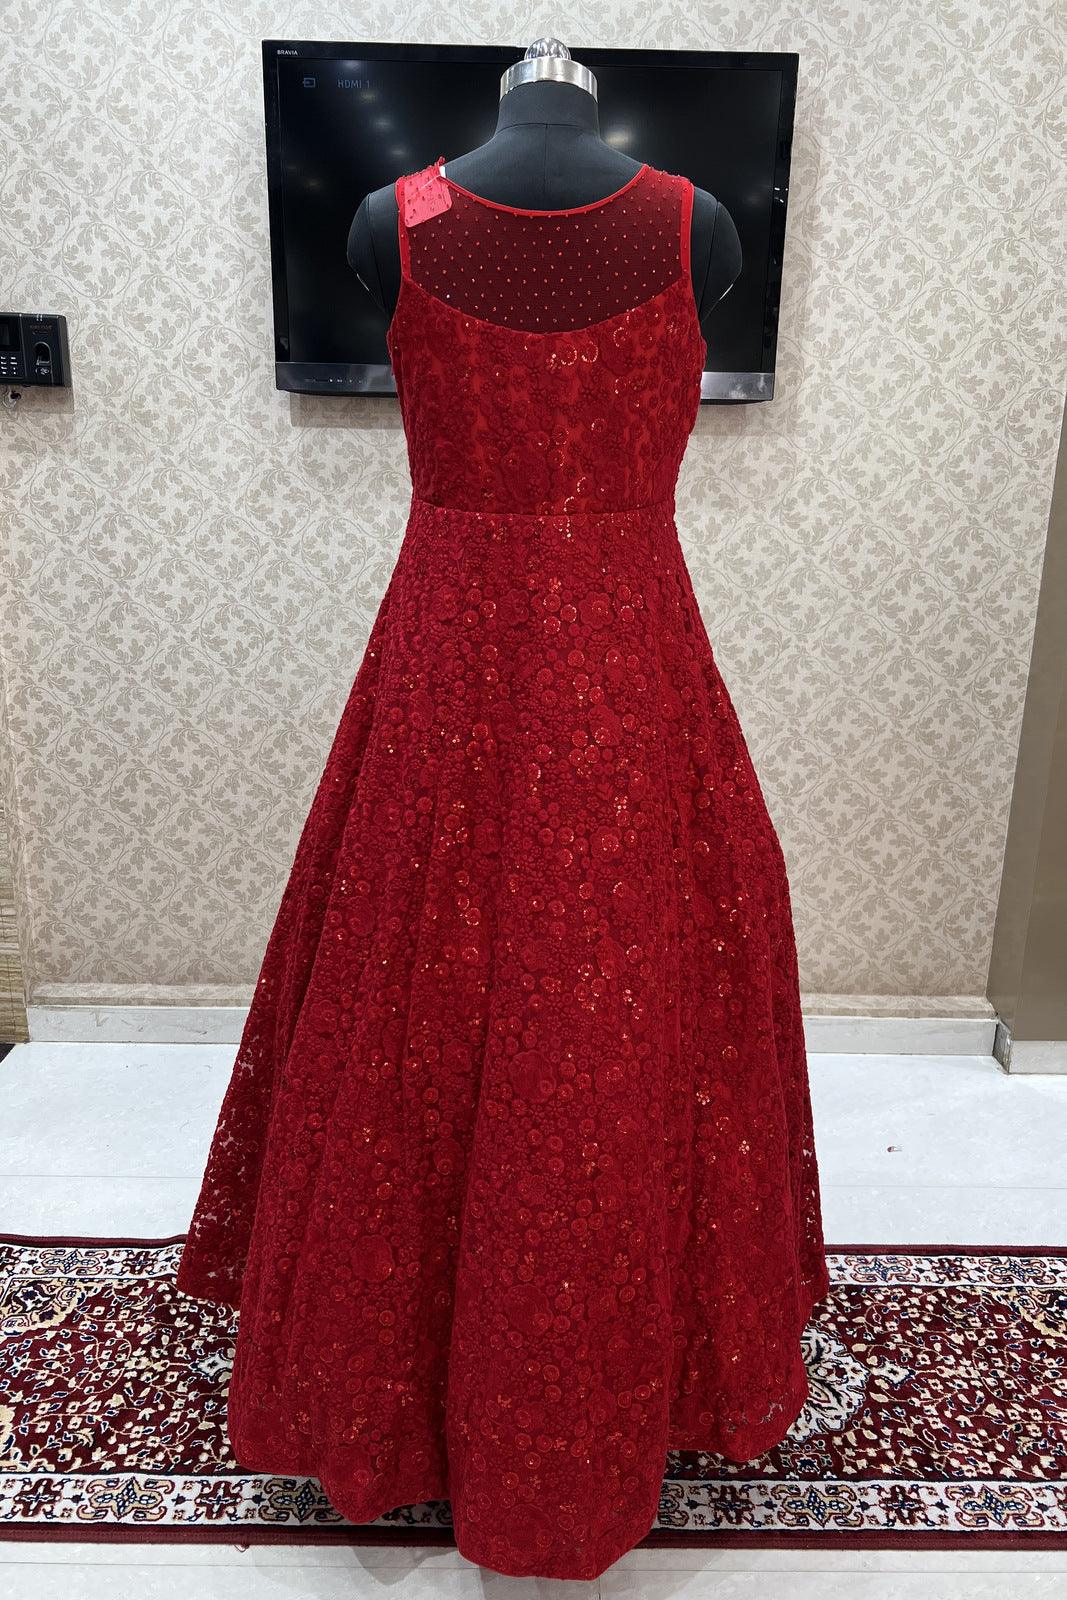 1940's Red Floral Dress – pattern scissors cloth